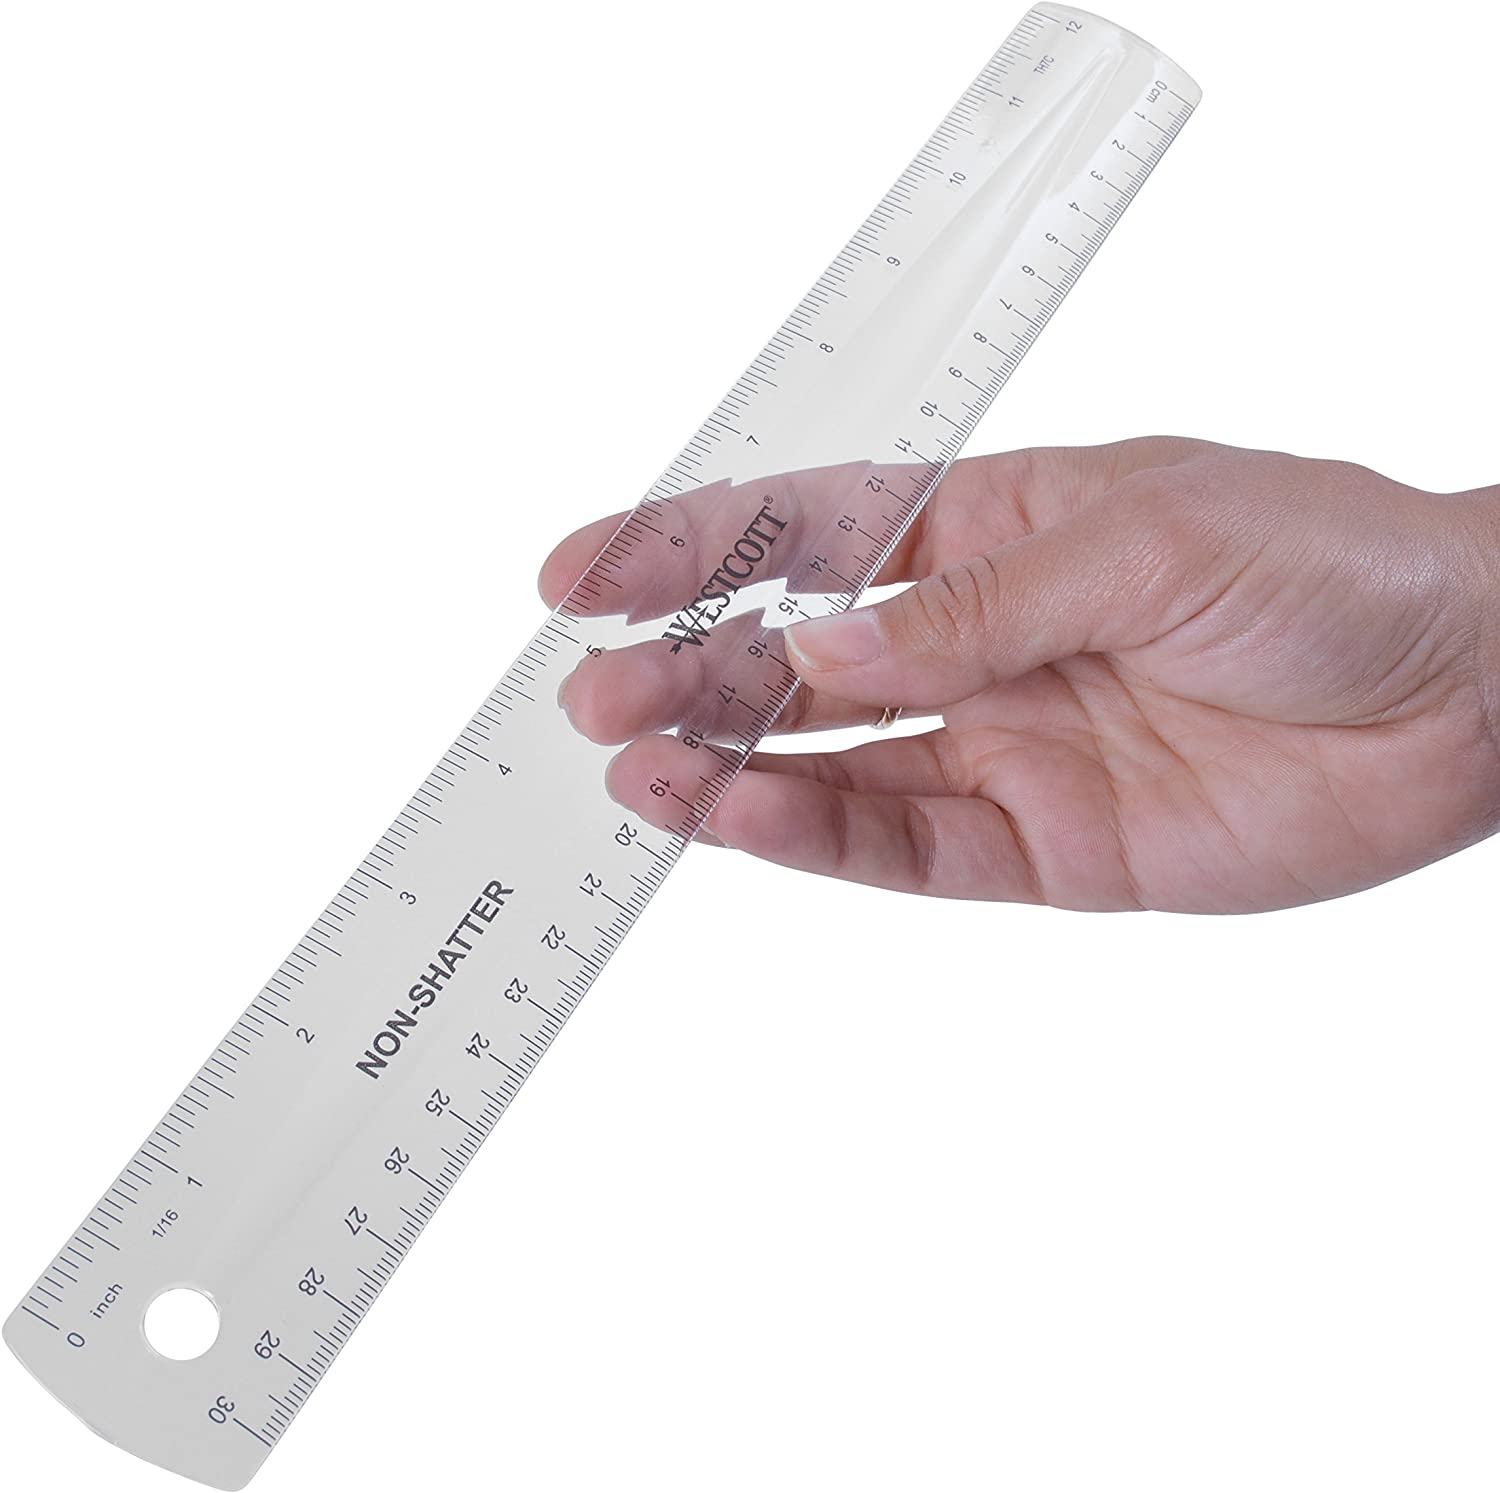 Ruler - Detectable: 24 Inch Ruler